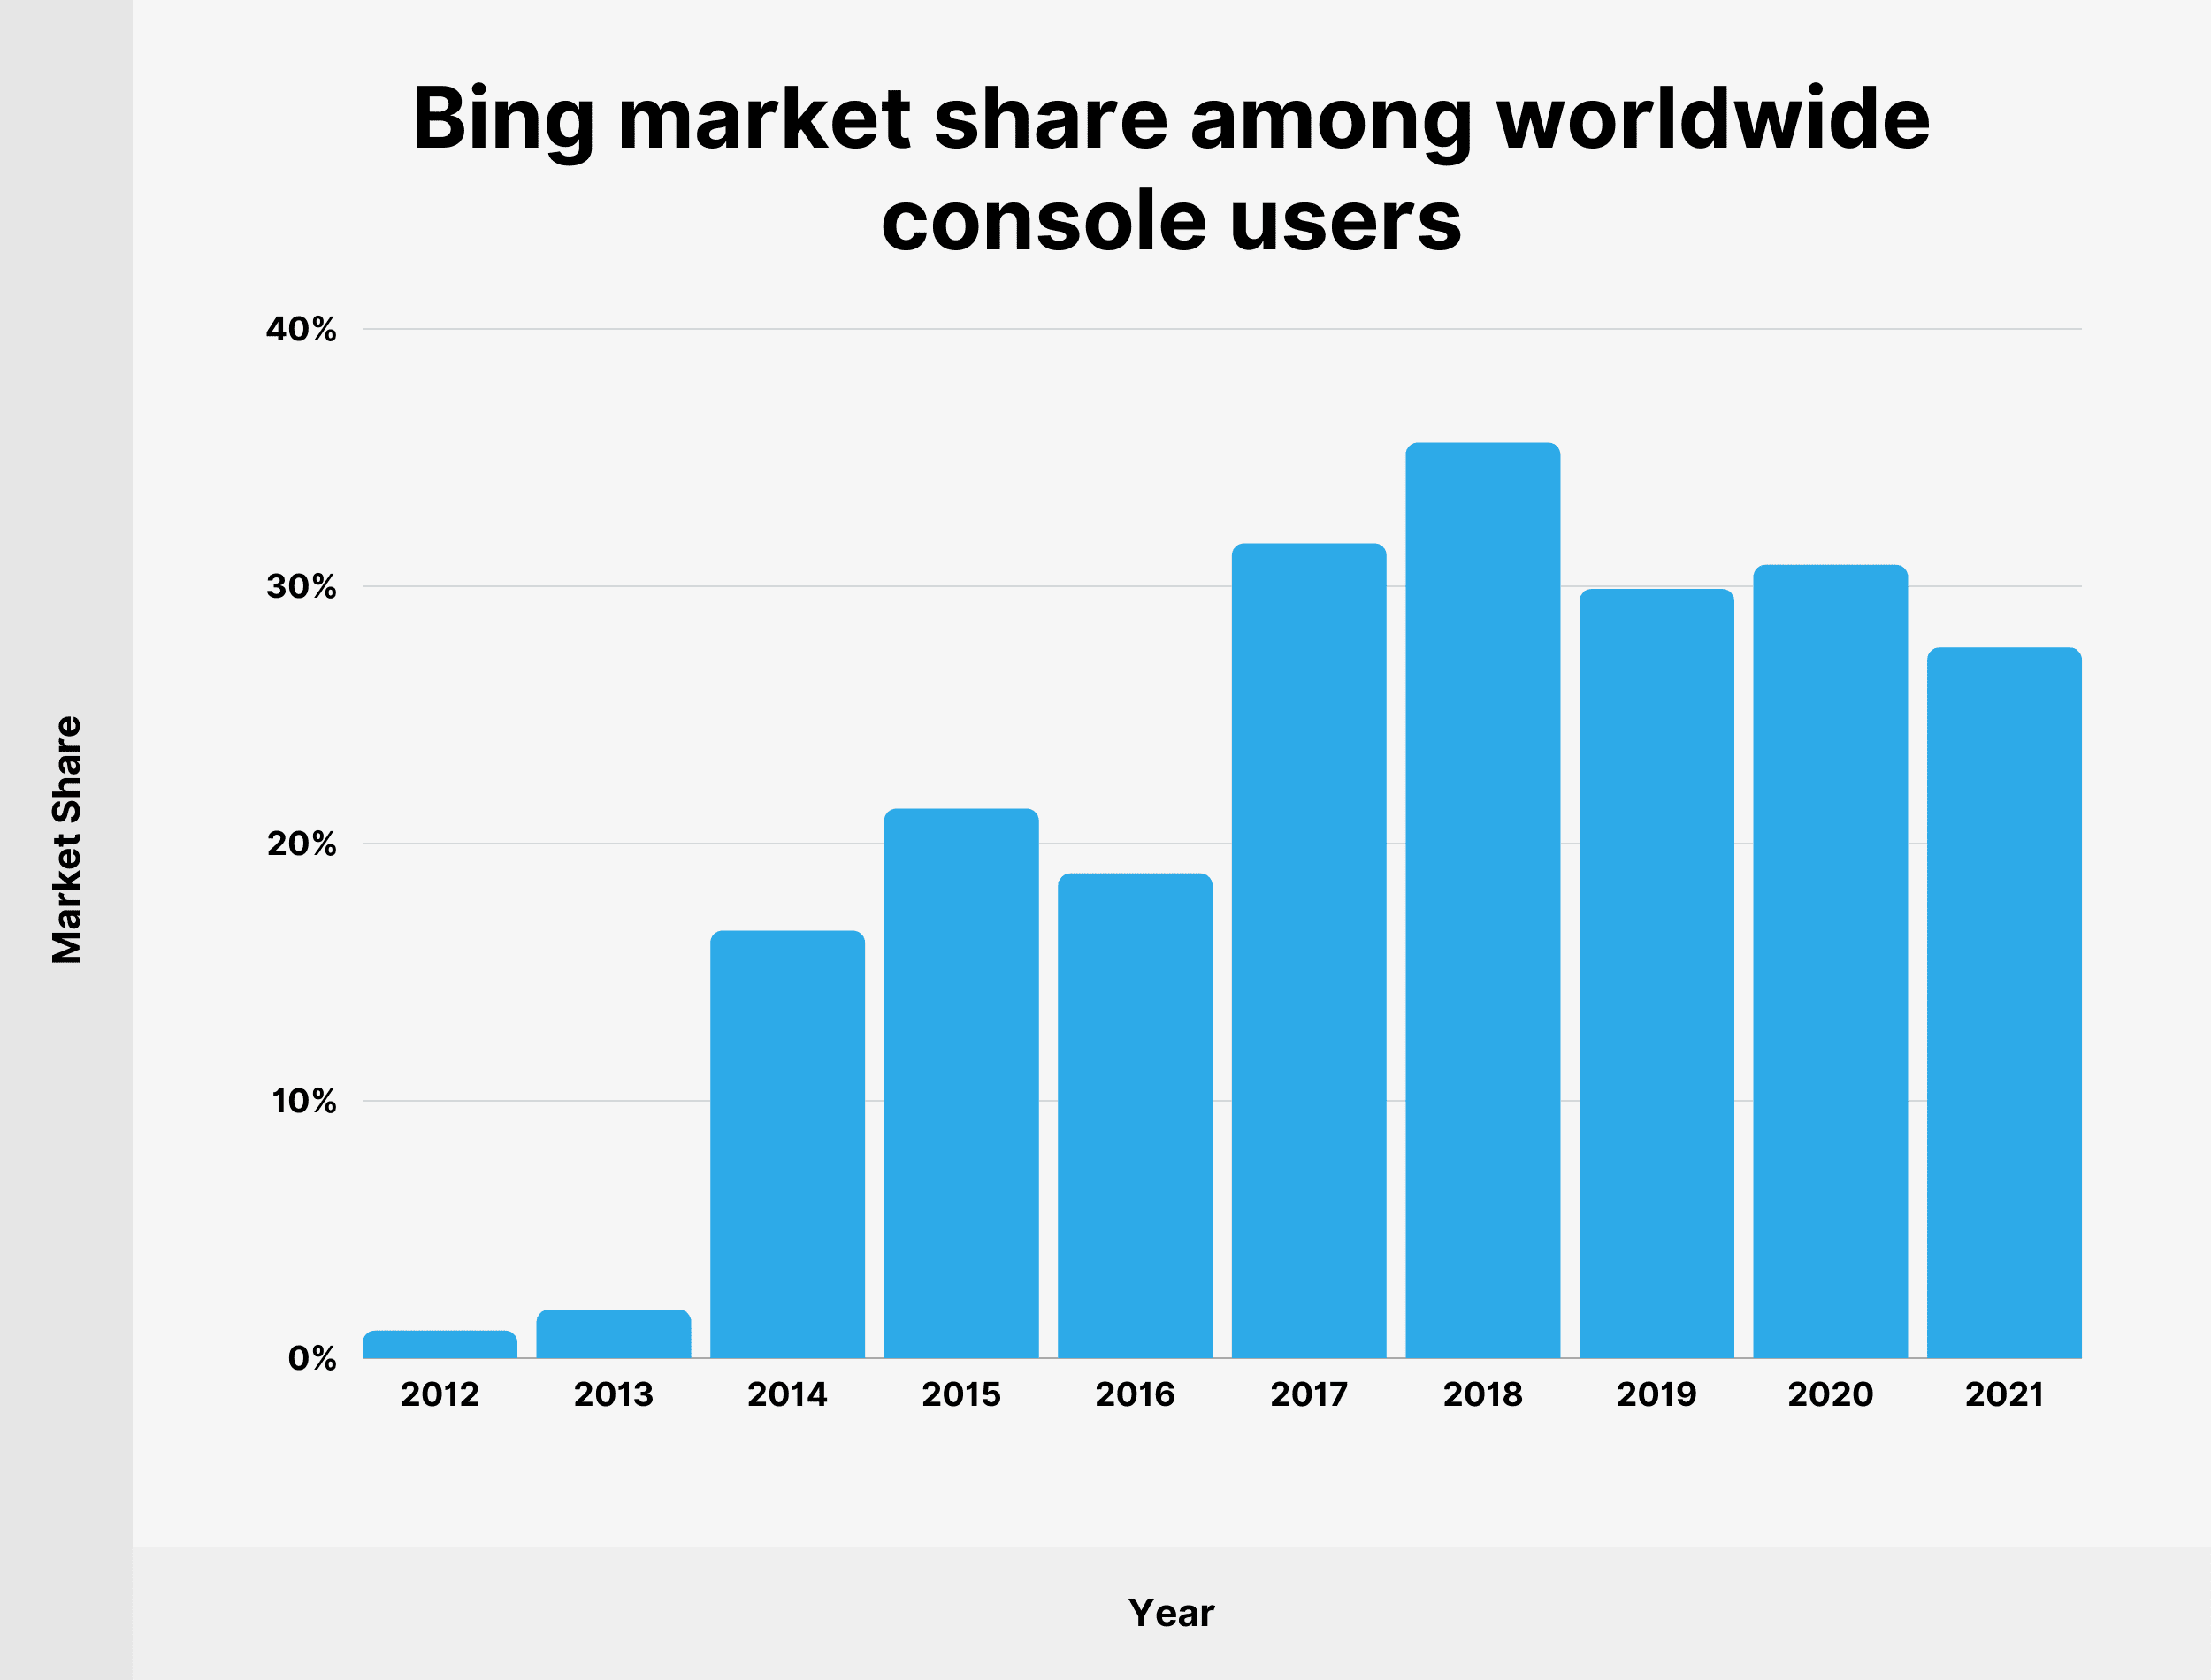 Bing market share among worldwide console users